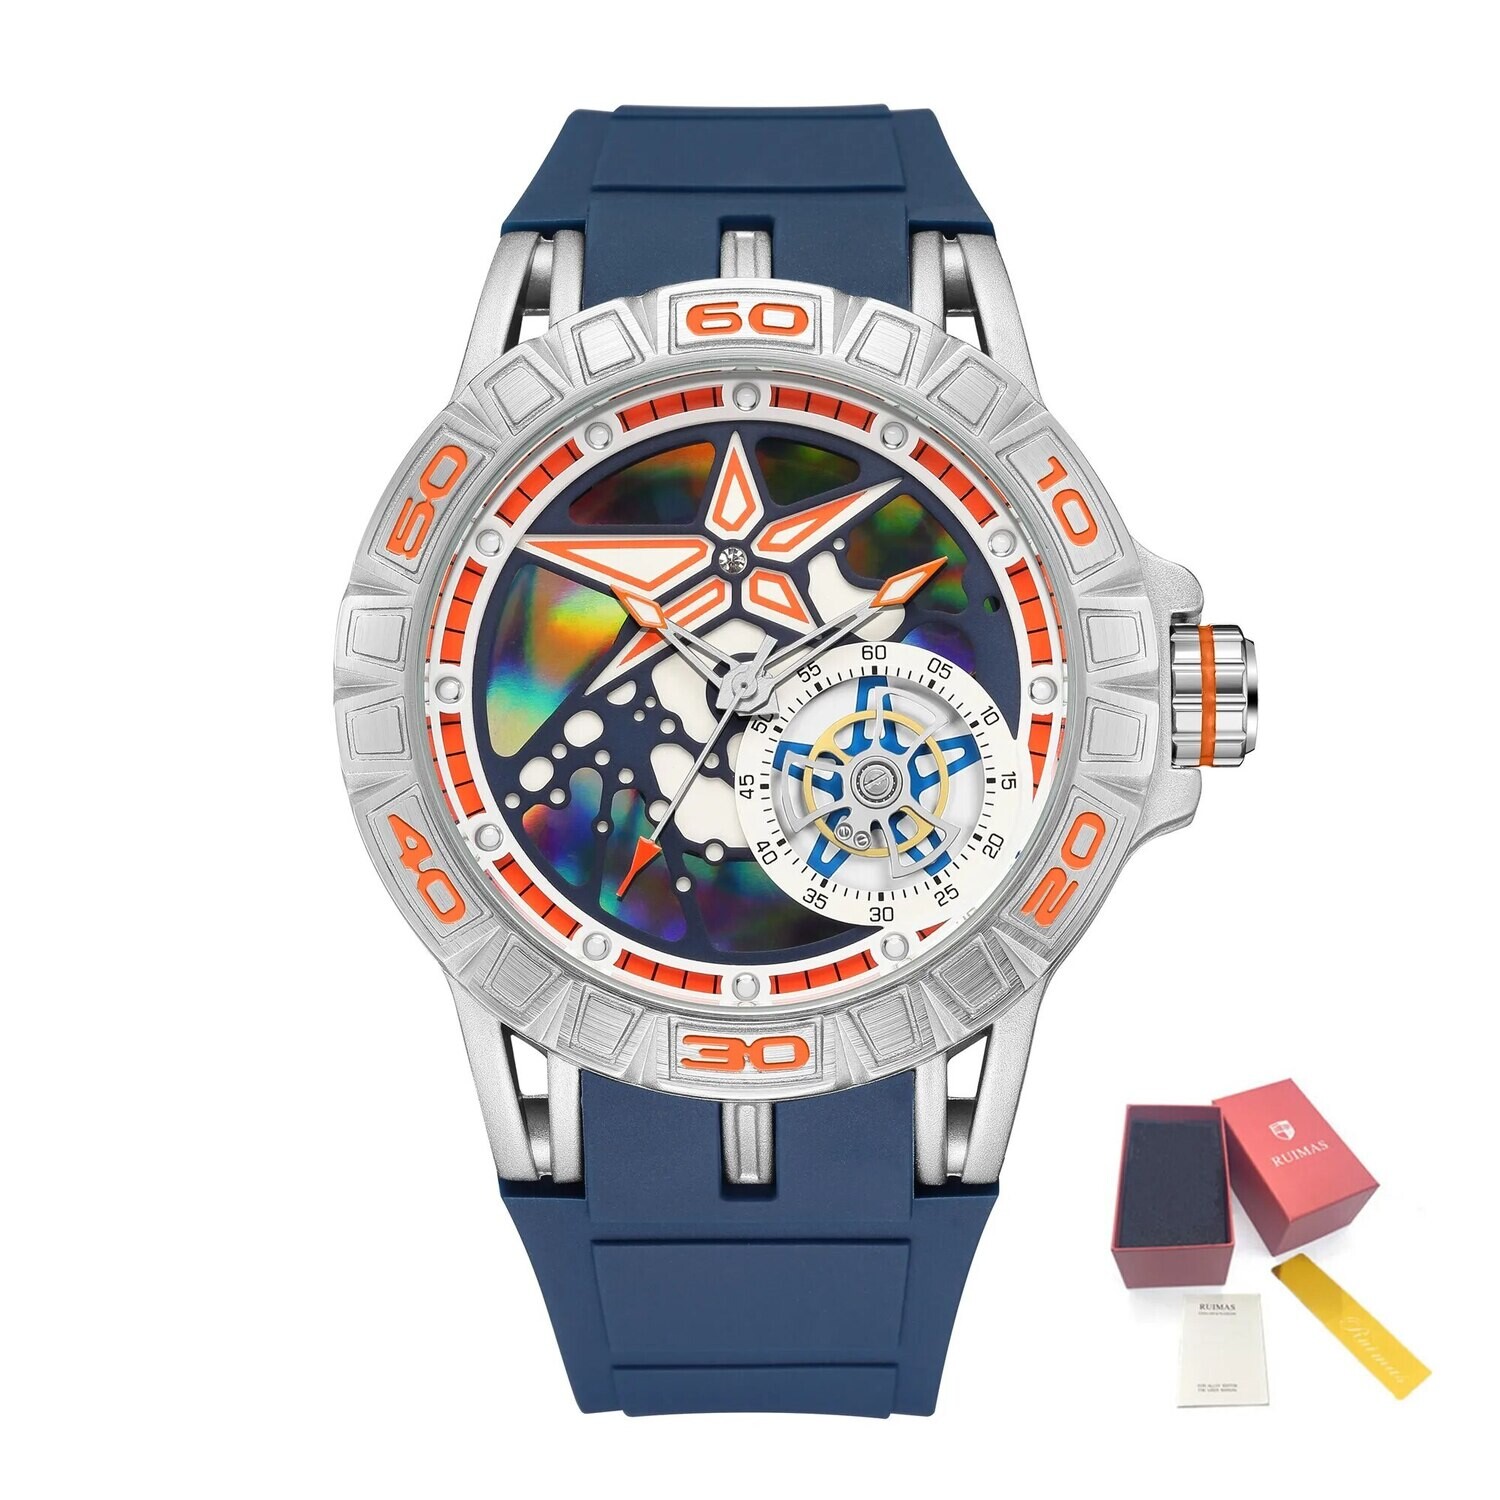 RUIMAS New Fashion Casual Watch for Men Top Brand Luxury Sport Military WristWatch Waterproof Big Dial Clock Relogios Masculino, Color: Silver Blue